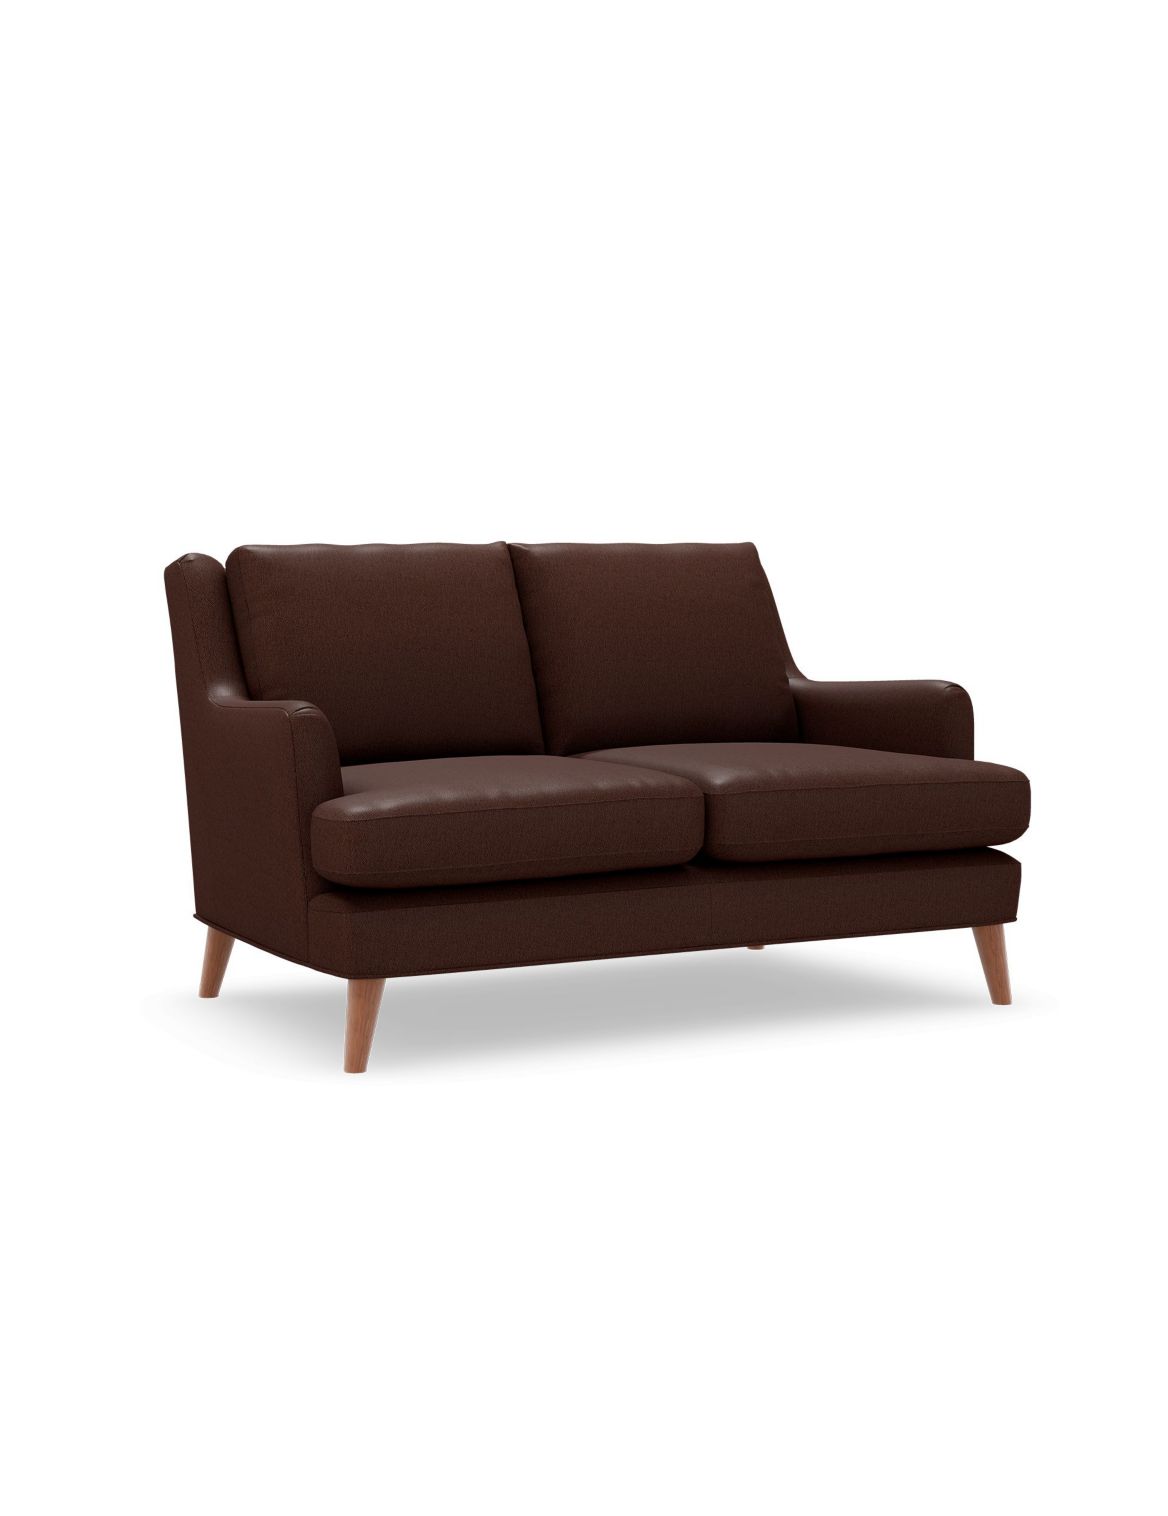 Ashton Compact Sofa brown